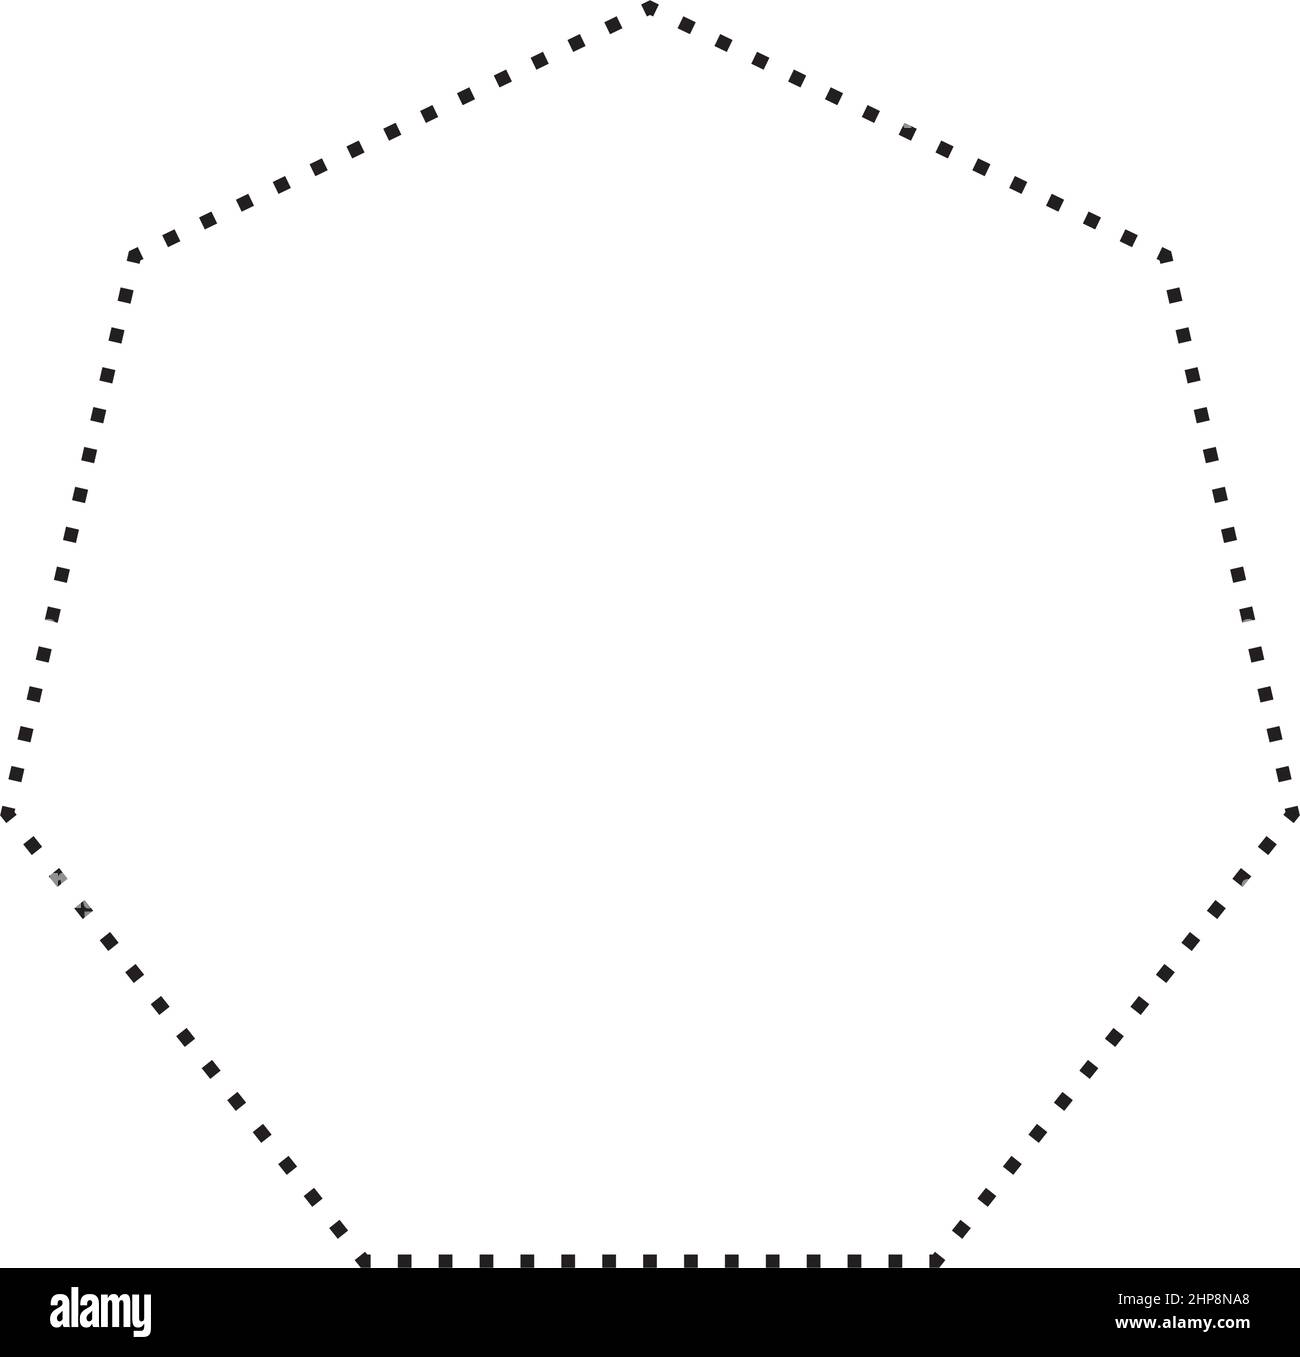 Heptagon Symbol gepunktete Form Vektor-Symbol für kreative Grafik-Design-ui-Element in einem Piktogramm Illustration Stock Vektor